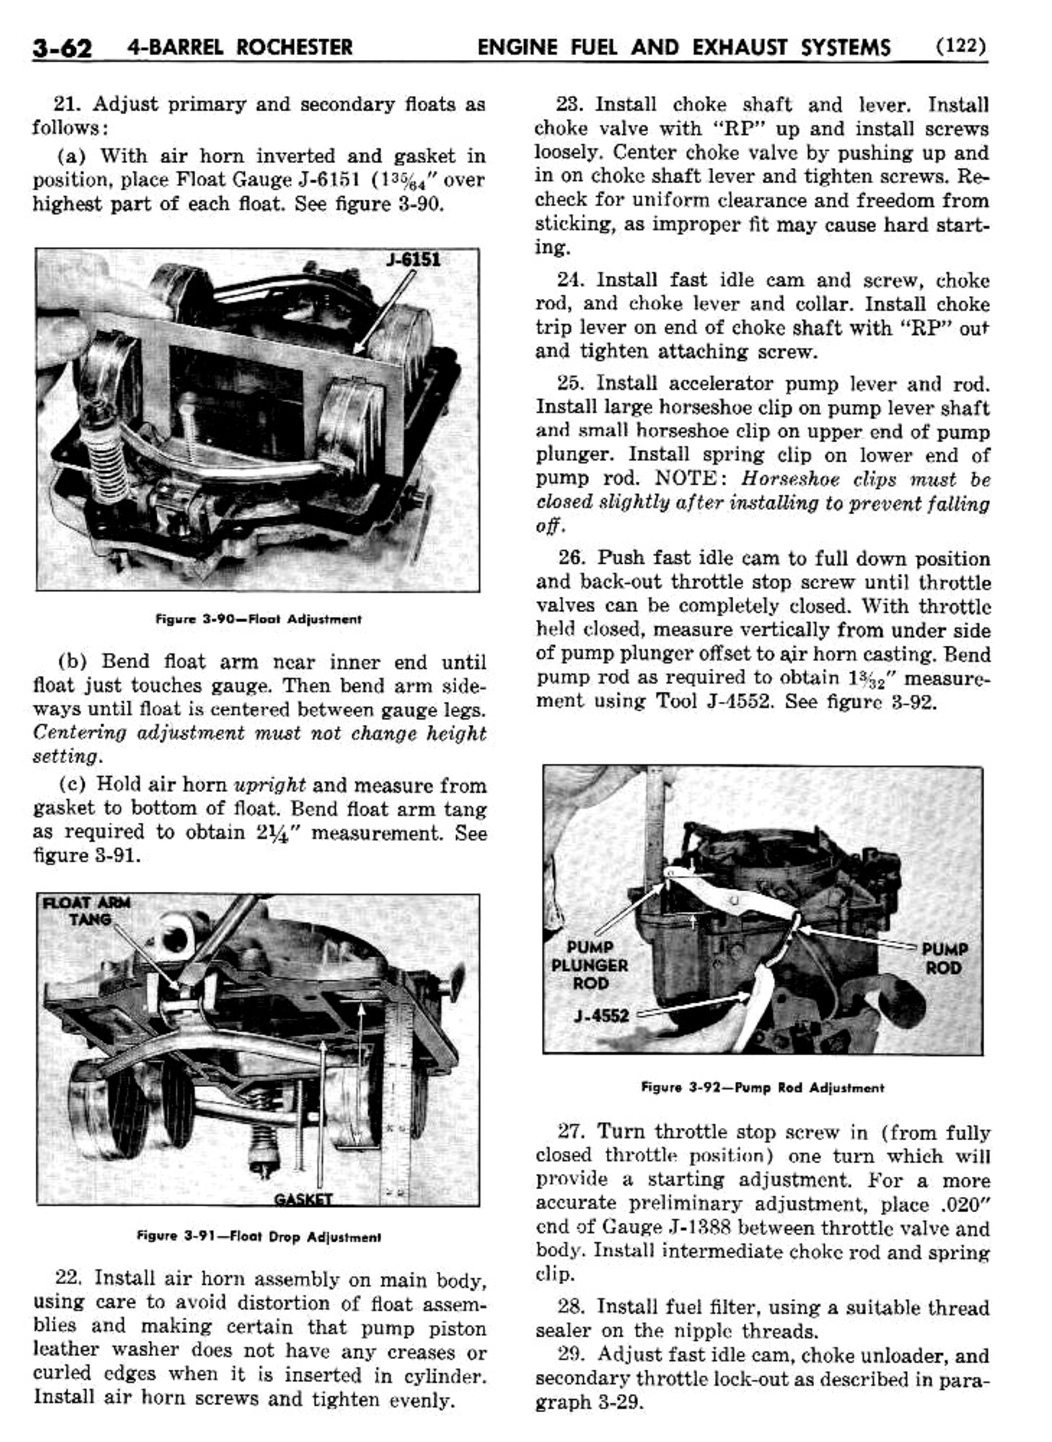 n_04 1956 Buick Shop Manual - Engine Fuel & Exhaust-062-062.jpg